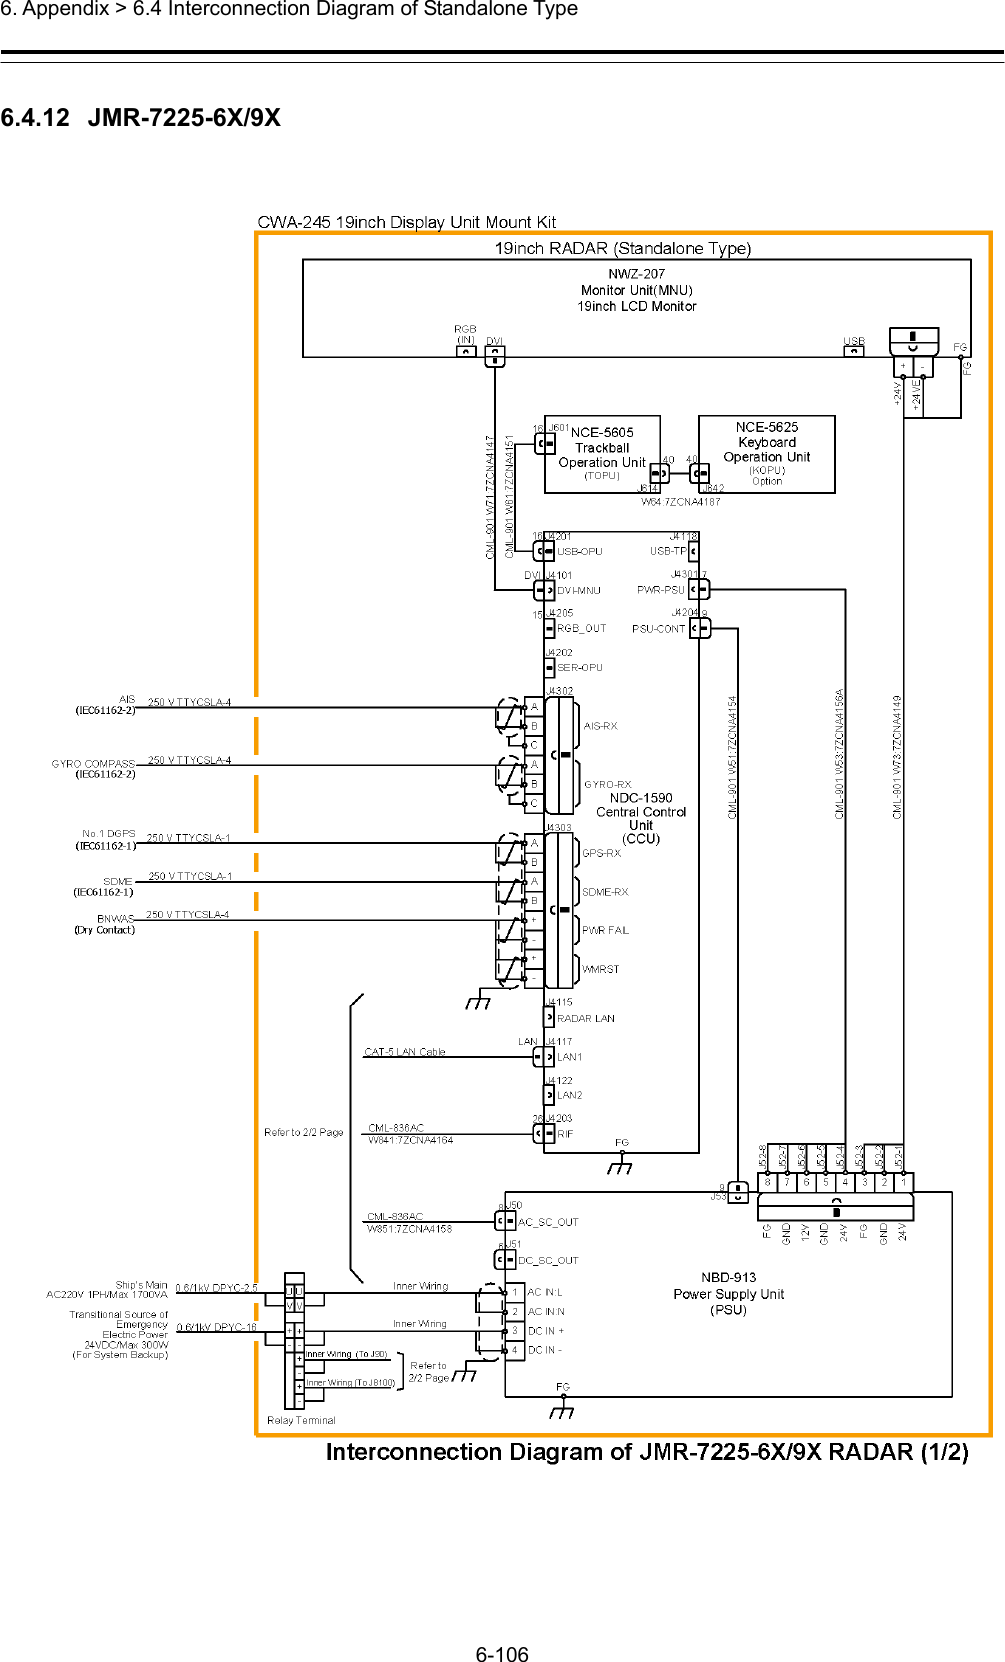  6. Appendix &gt; 6.4 Interconnection Diagram of Standalone Type 6-106  6.4.12  JMR-7225-6X/9X 